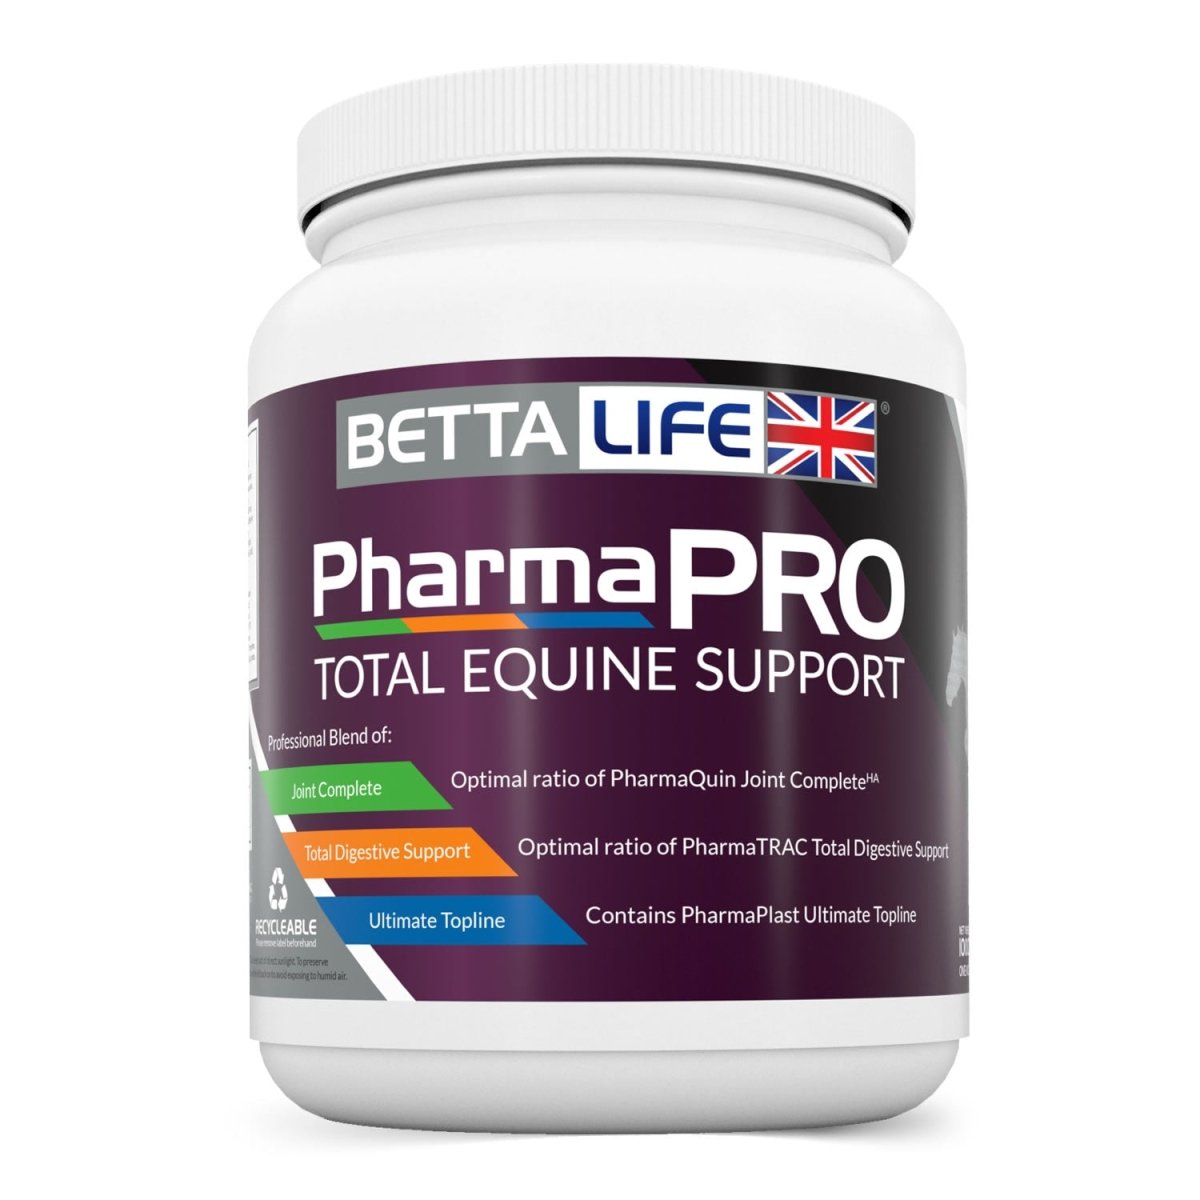 Bettalife Pharmapro Equine Support - 1Kg -